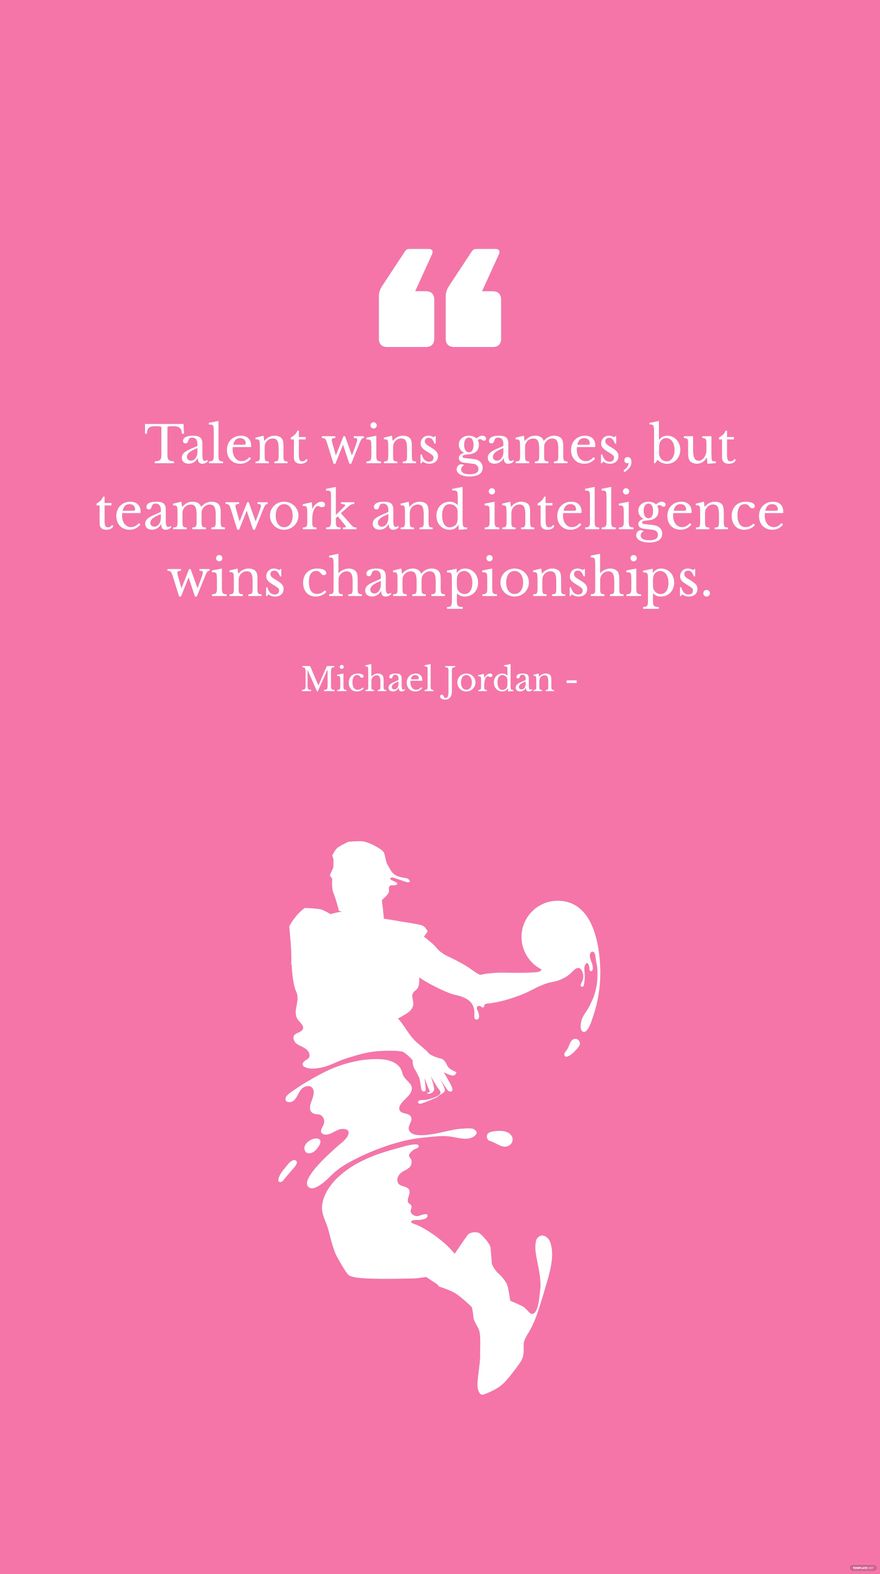 Free Michael Jordan - Talent wins games, but teamwork and intelligence wins championships. in JPG